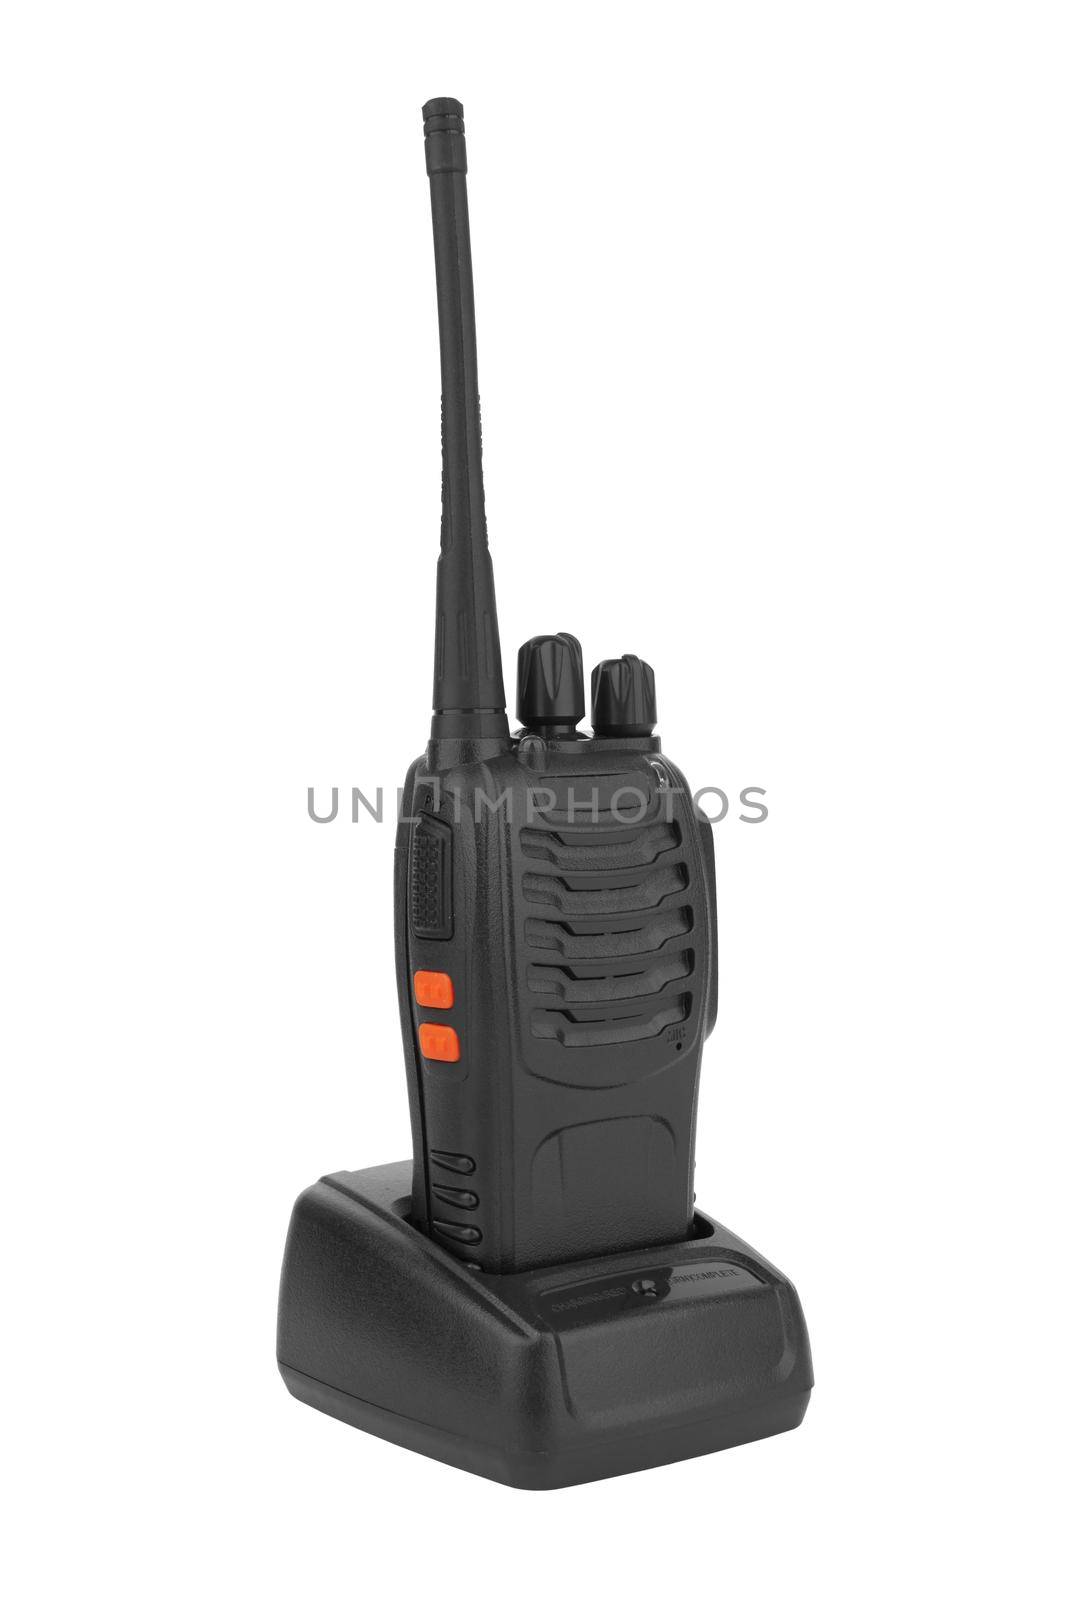 Radio communication device by pioneer111